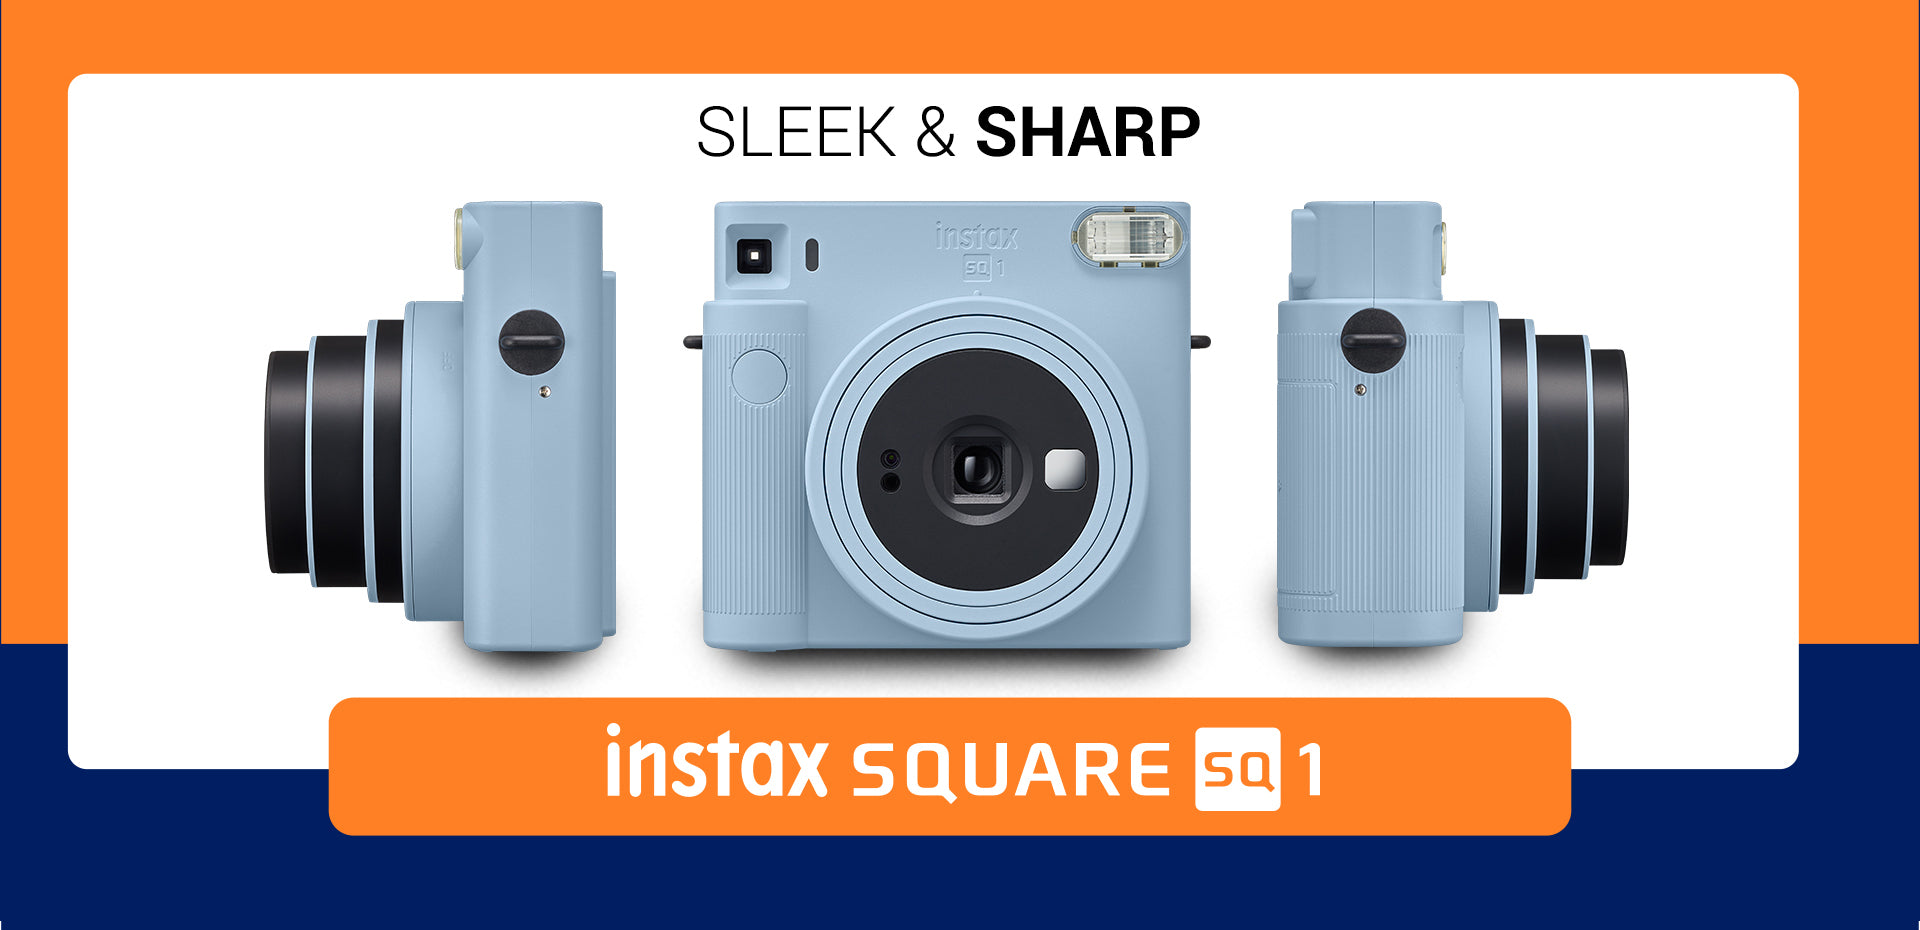 Instax Square SQ-1 Starter Kit - Sleek Instant square camera